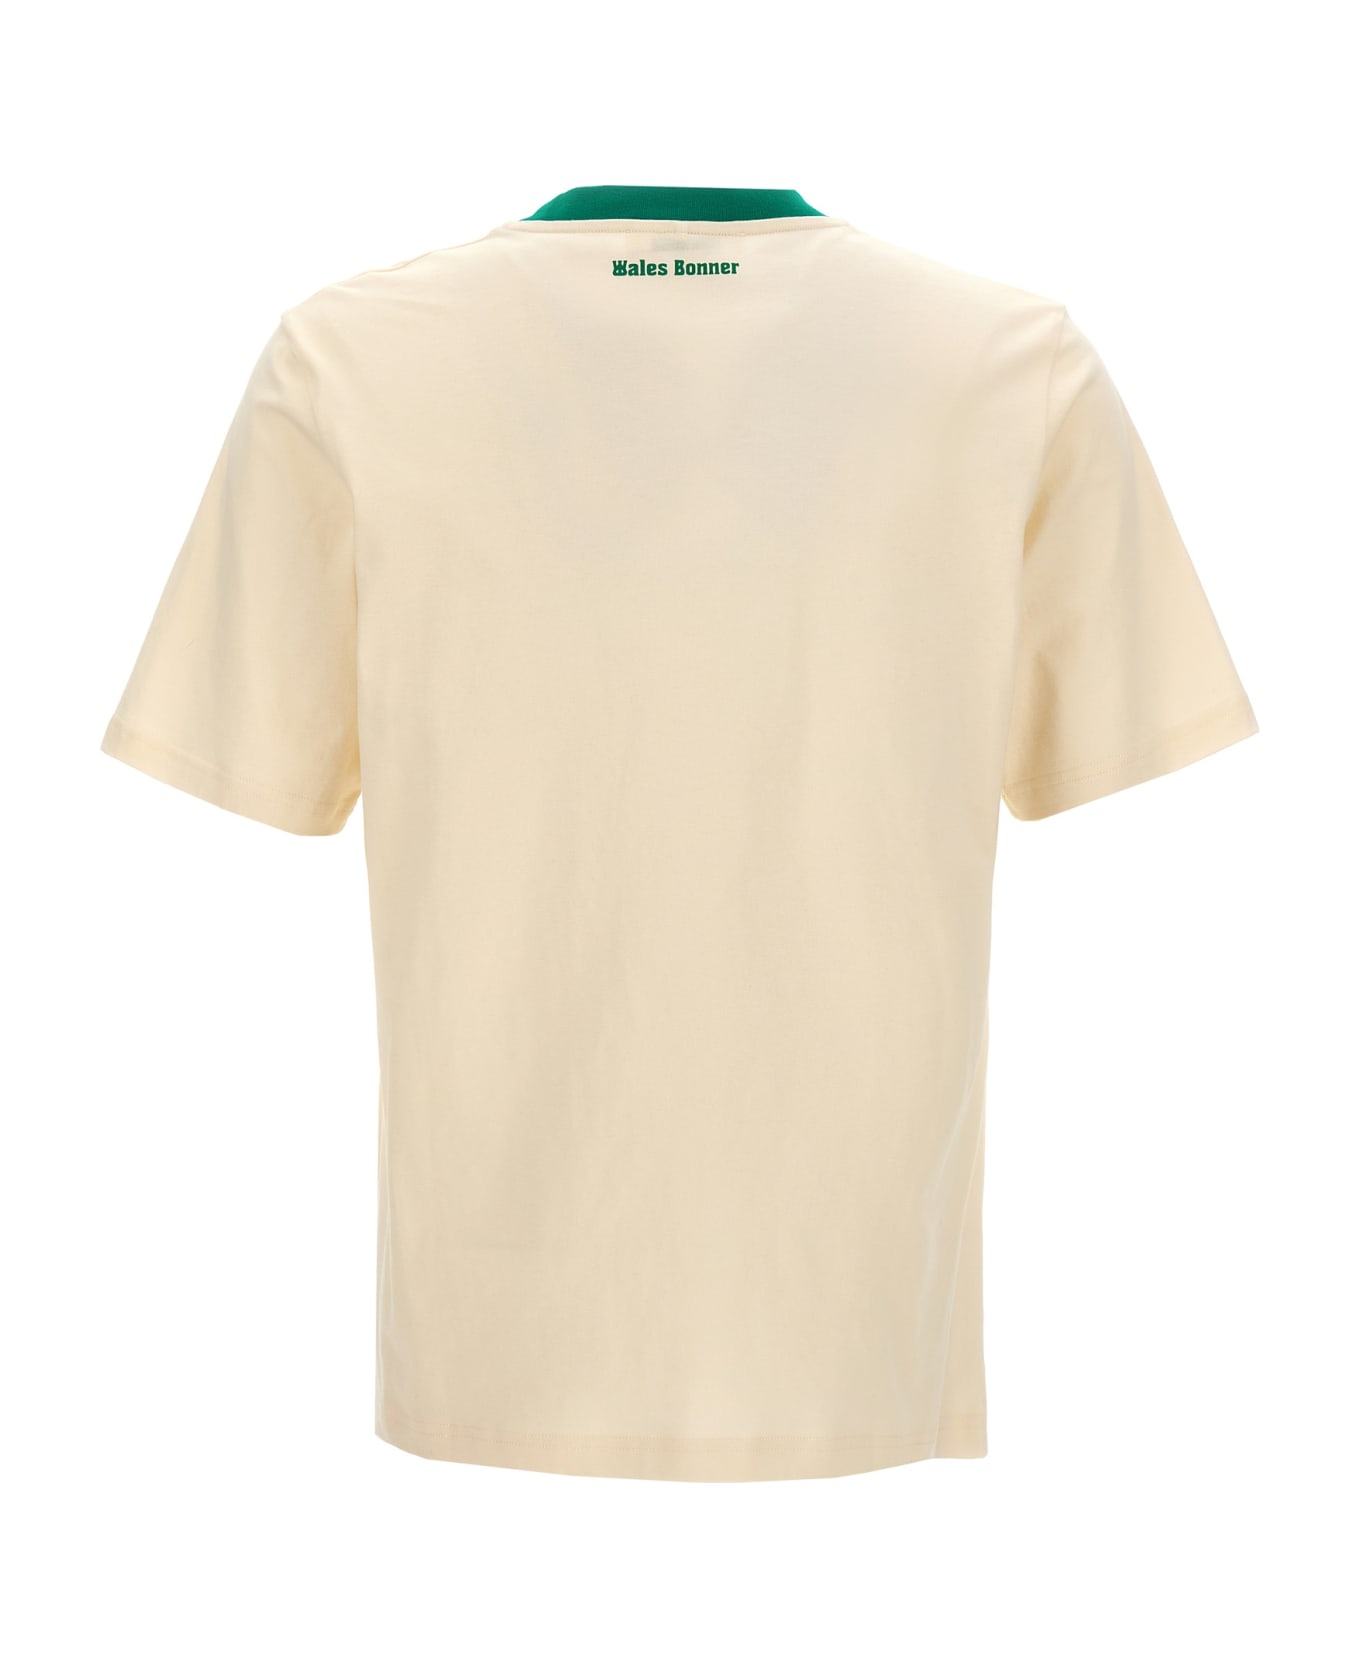 Wales Bonner 'resilience' T-shirt - White シャツ